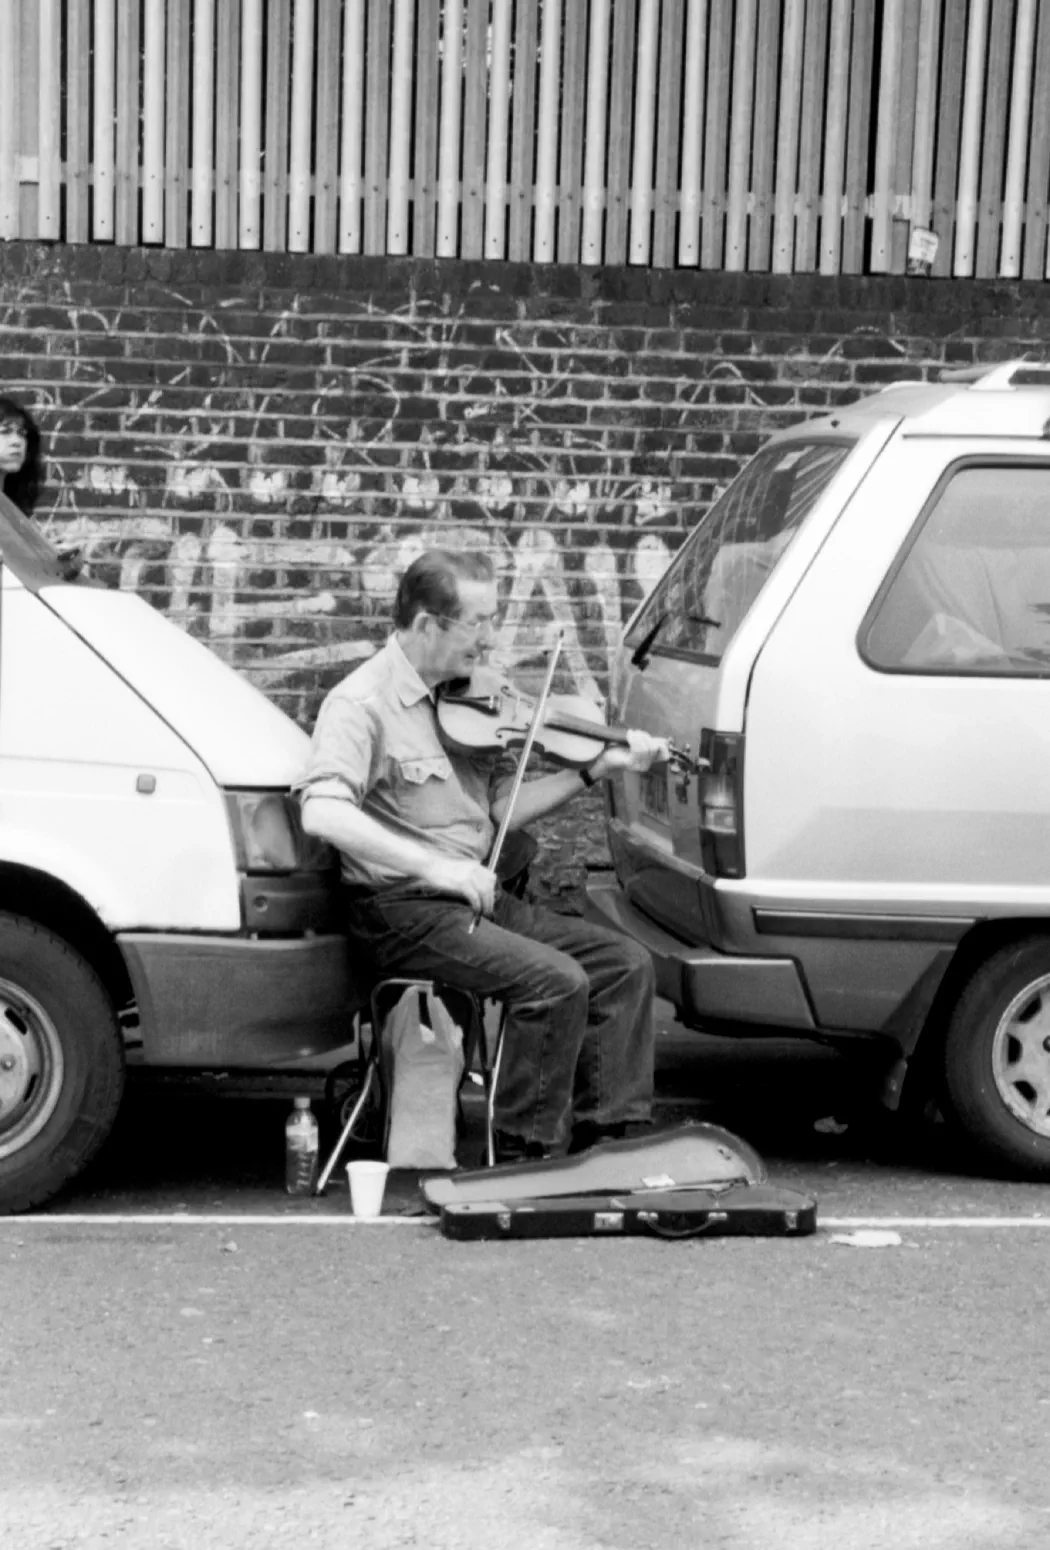 Play it again Sam. Portobello Market, London, England. April 2000